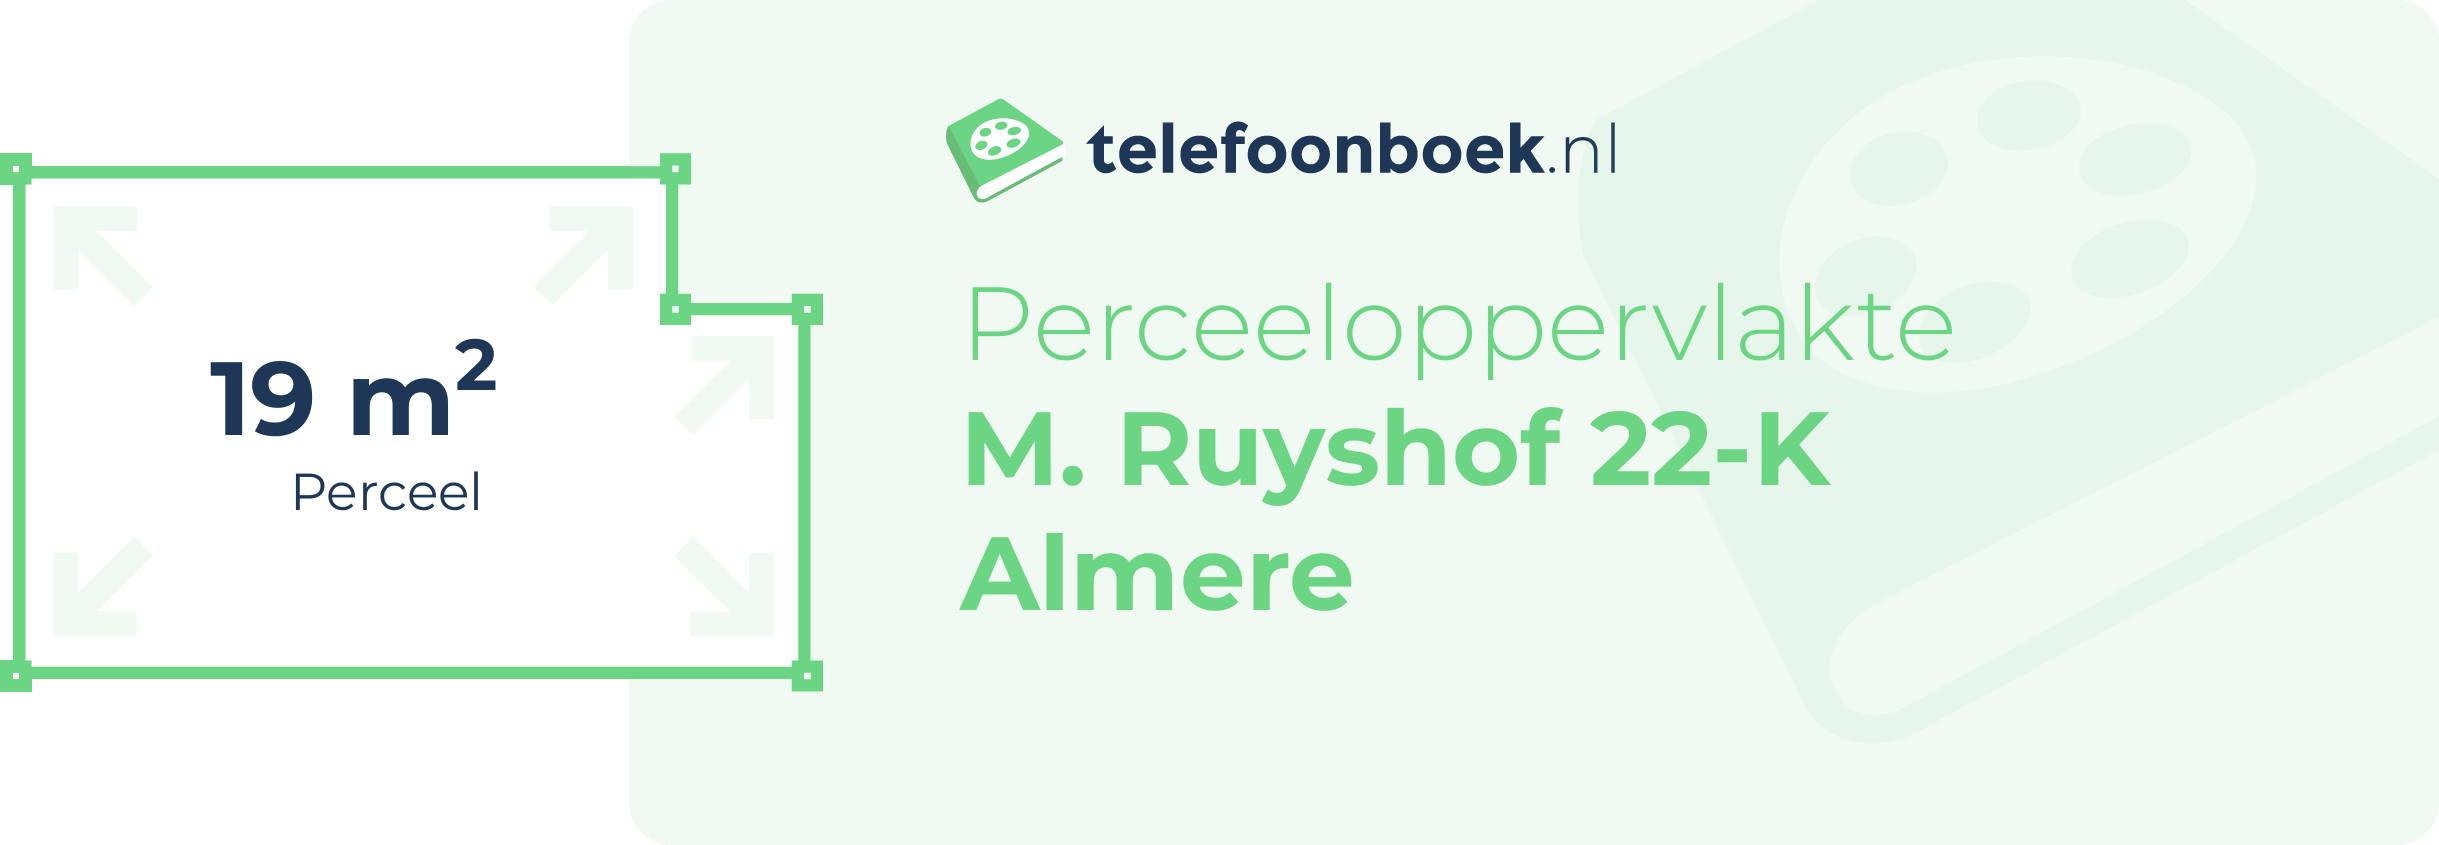 Perceeloppervlakte M. Ruyshof 22-K Almere